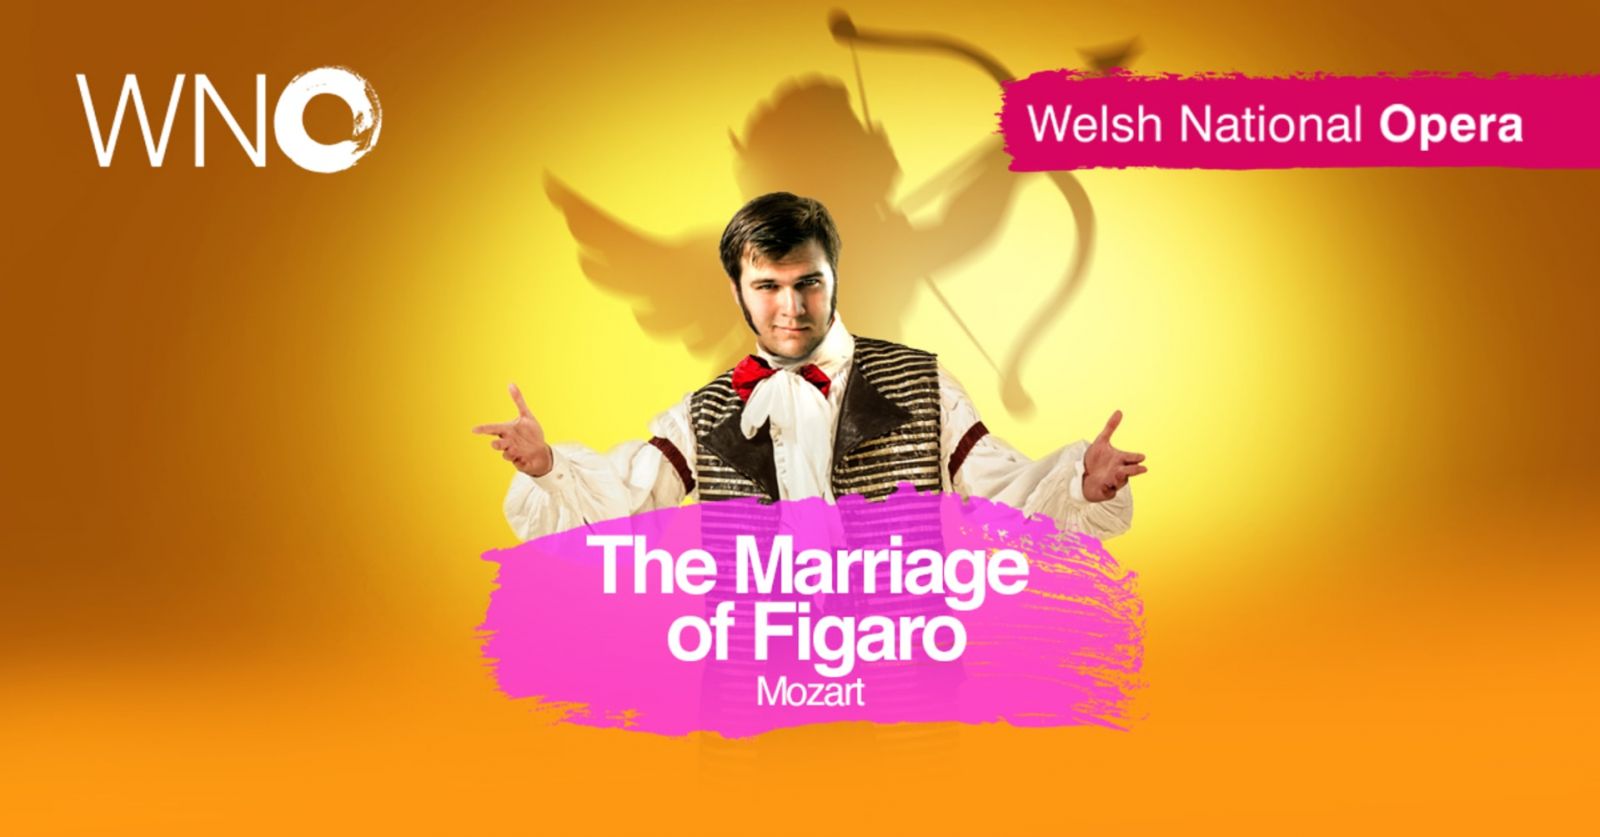 WNO: The Marriage of Figaro at the Bristol Hippodrome.